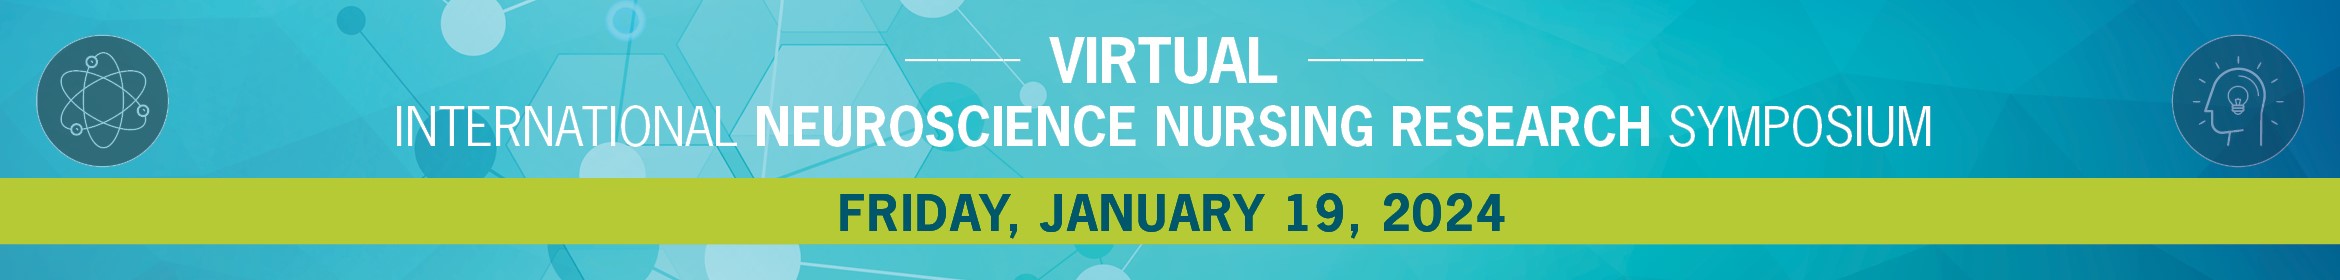 2024 International Neuroscience Nursing Research Symposium - Virtual  Main banner